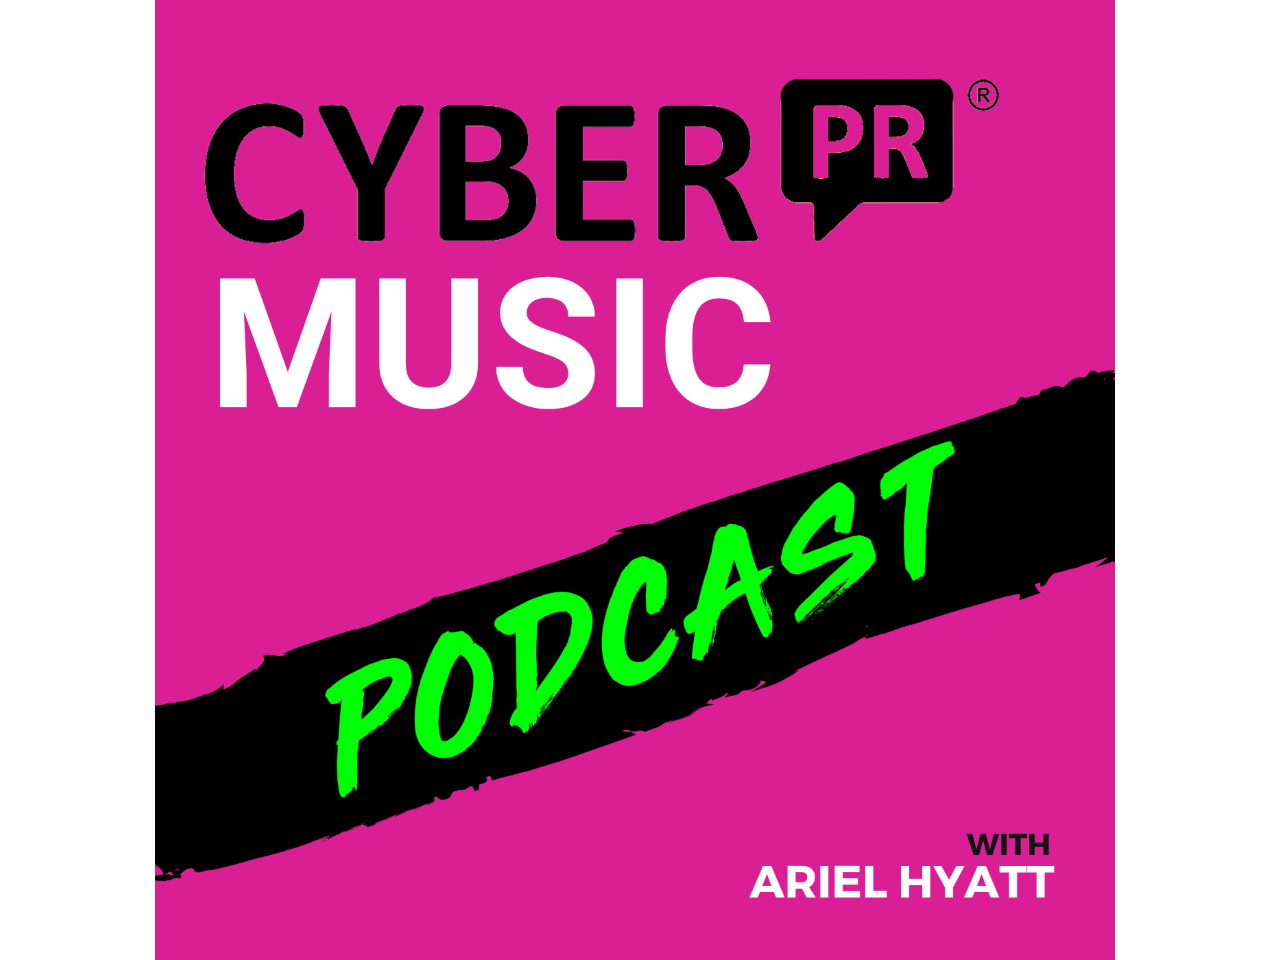 Cyber PR Podcast with Ariel Hyatt